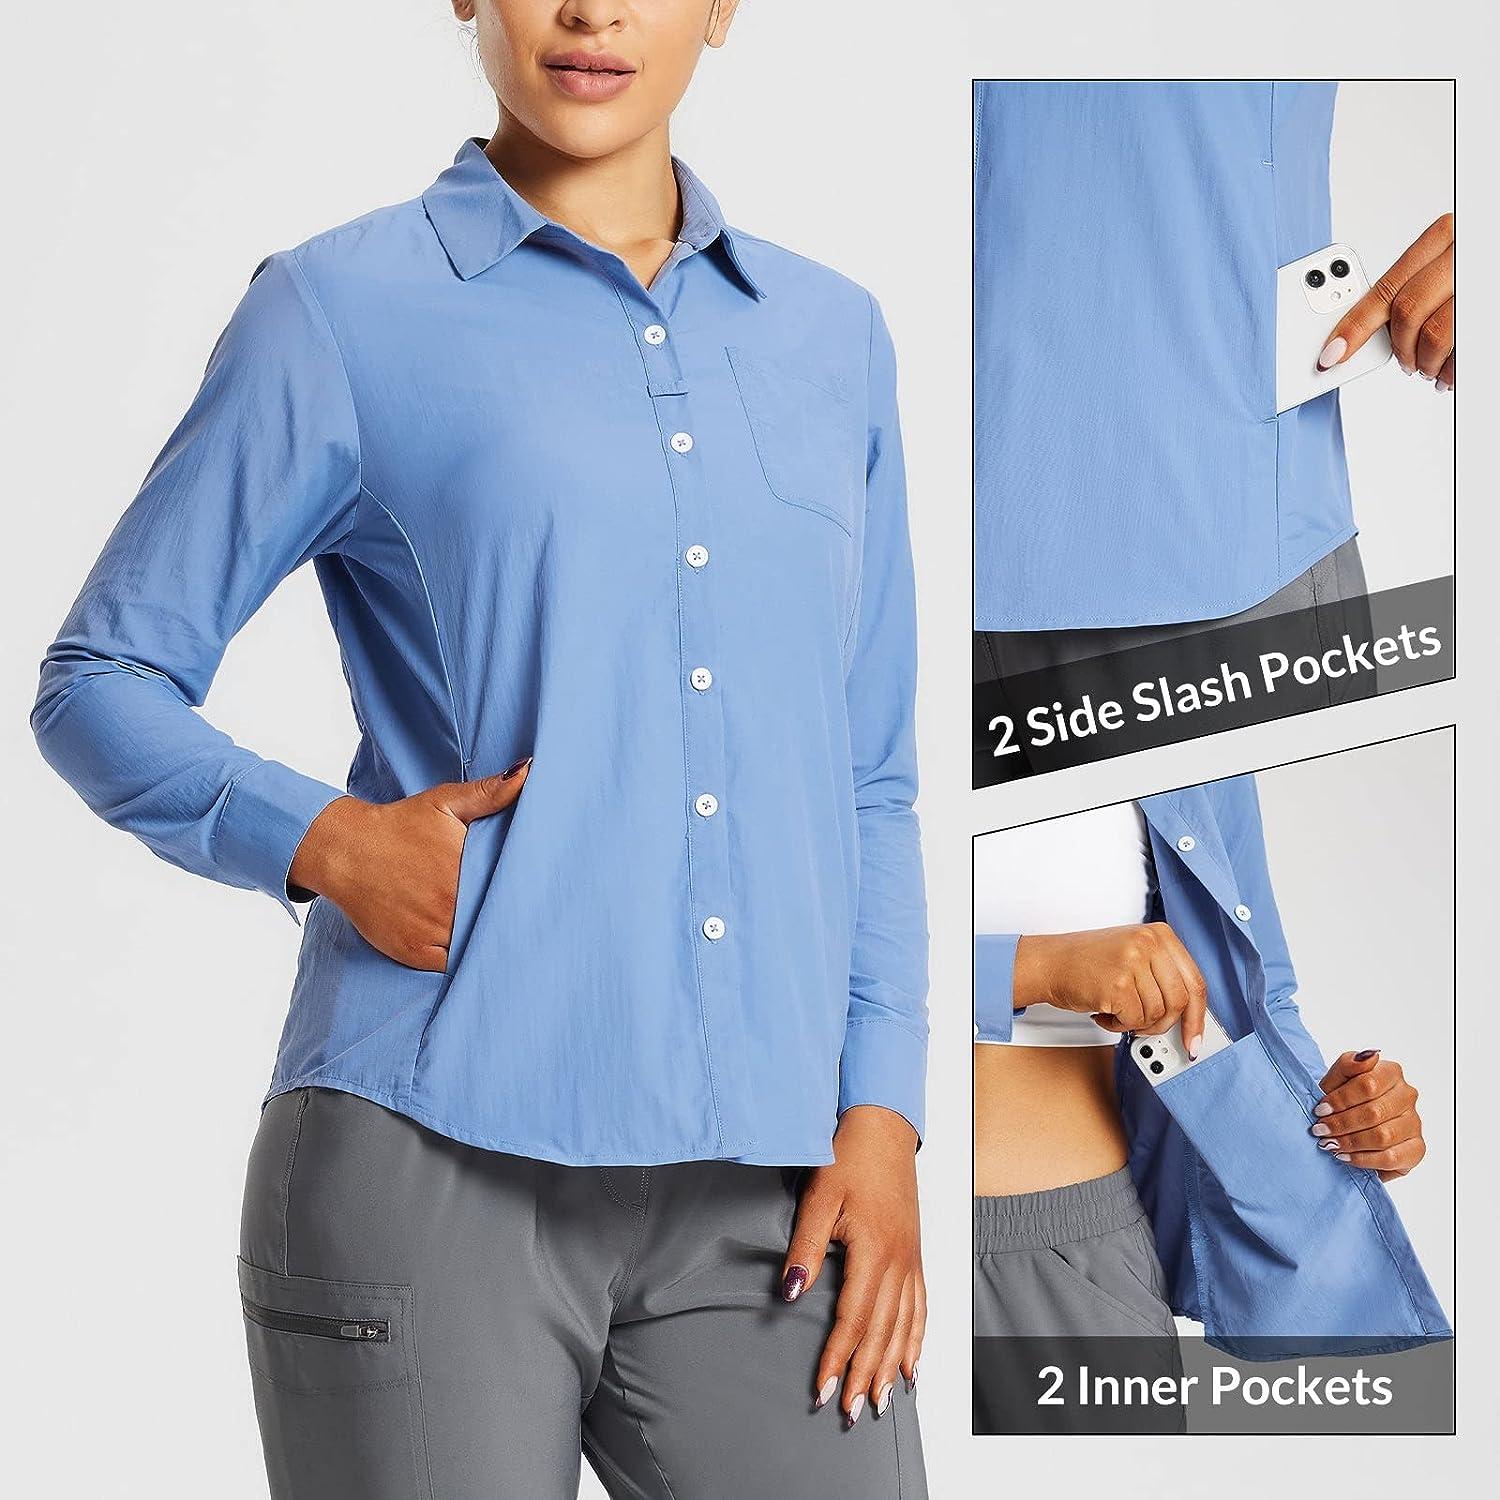 Baleaf Women's UPF 50+ Quick-Dry Long Sleeves Sun Shirts M / Ashleigh Blue